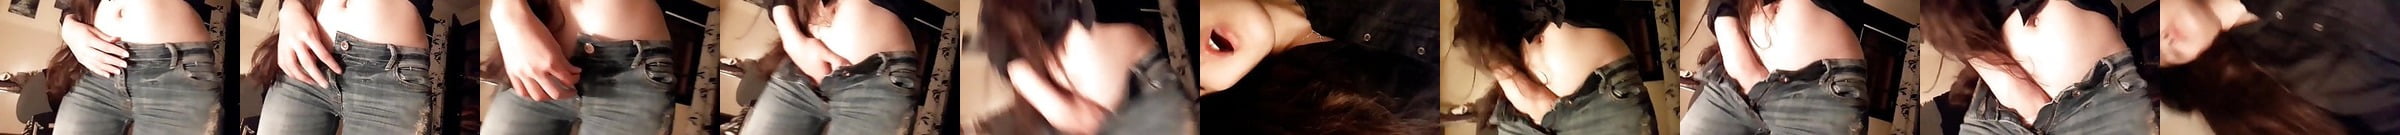 Free Sex Arab Porn Videos Xhamster